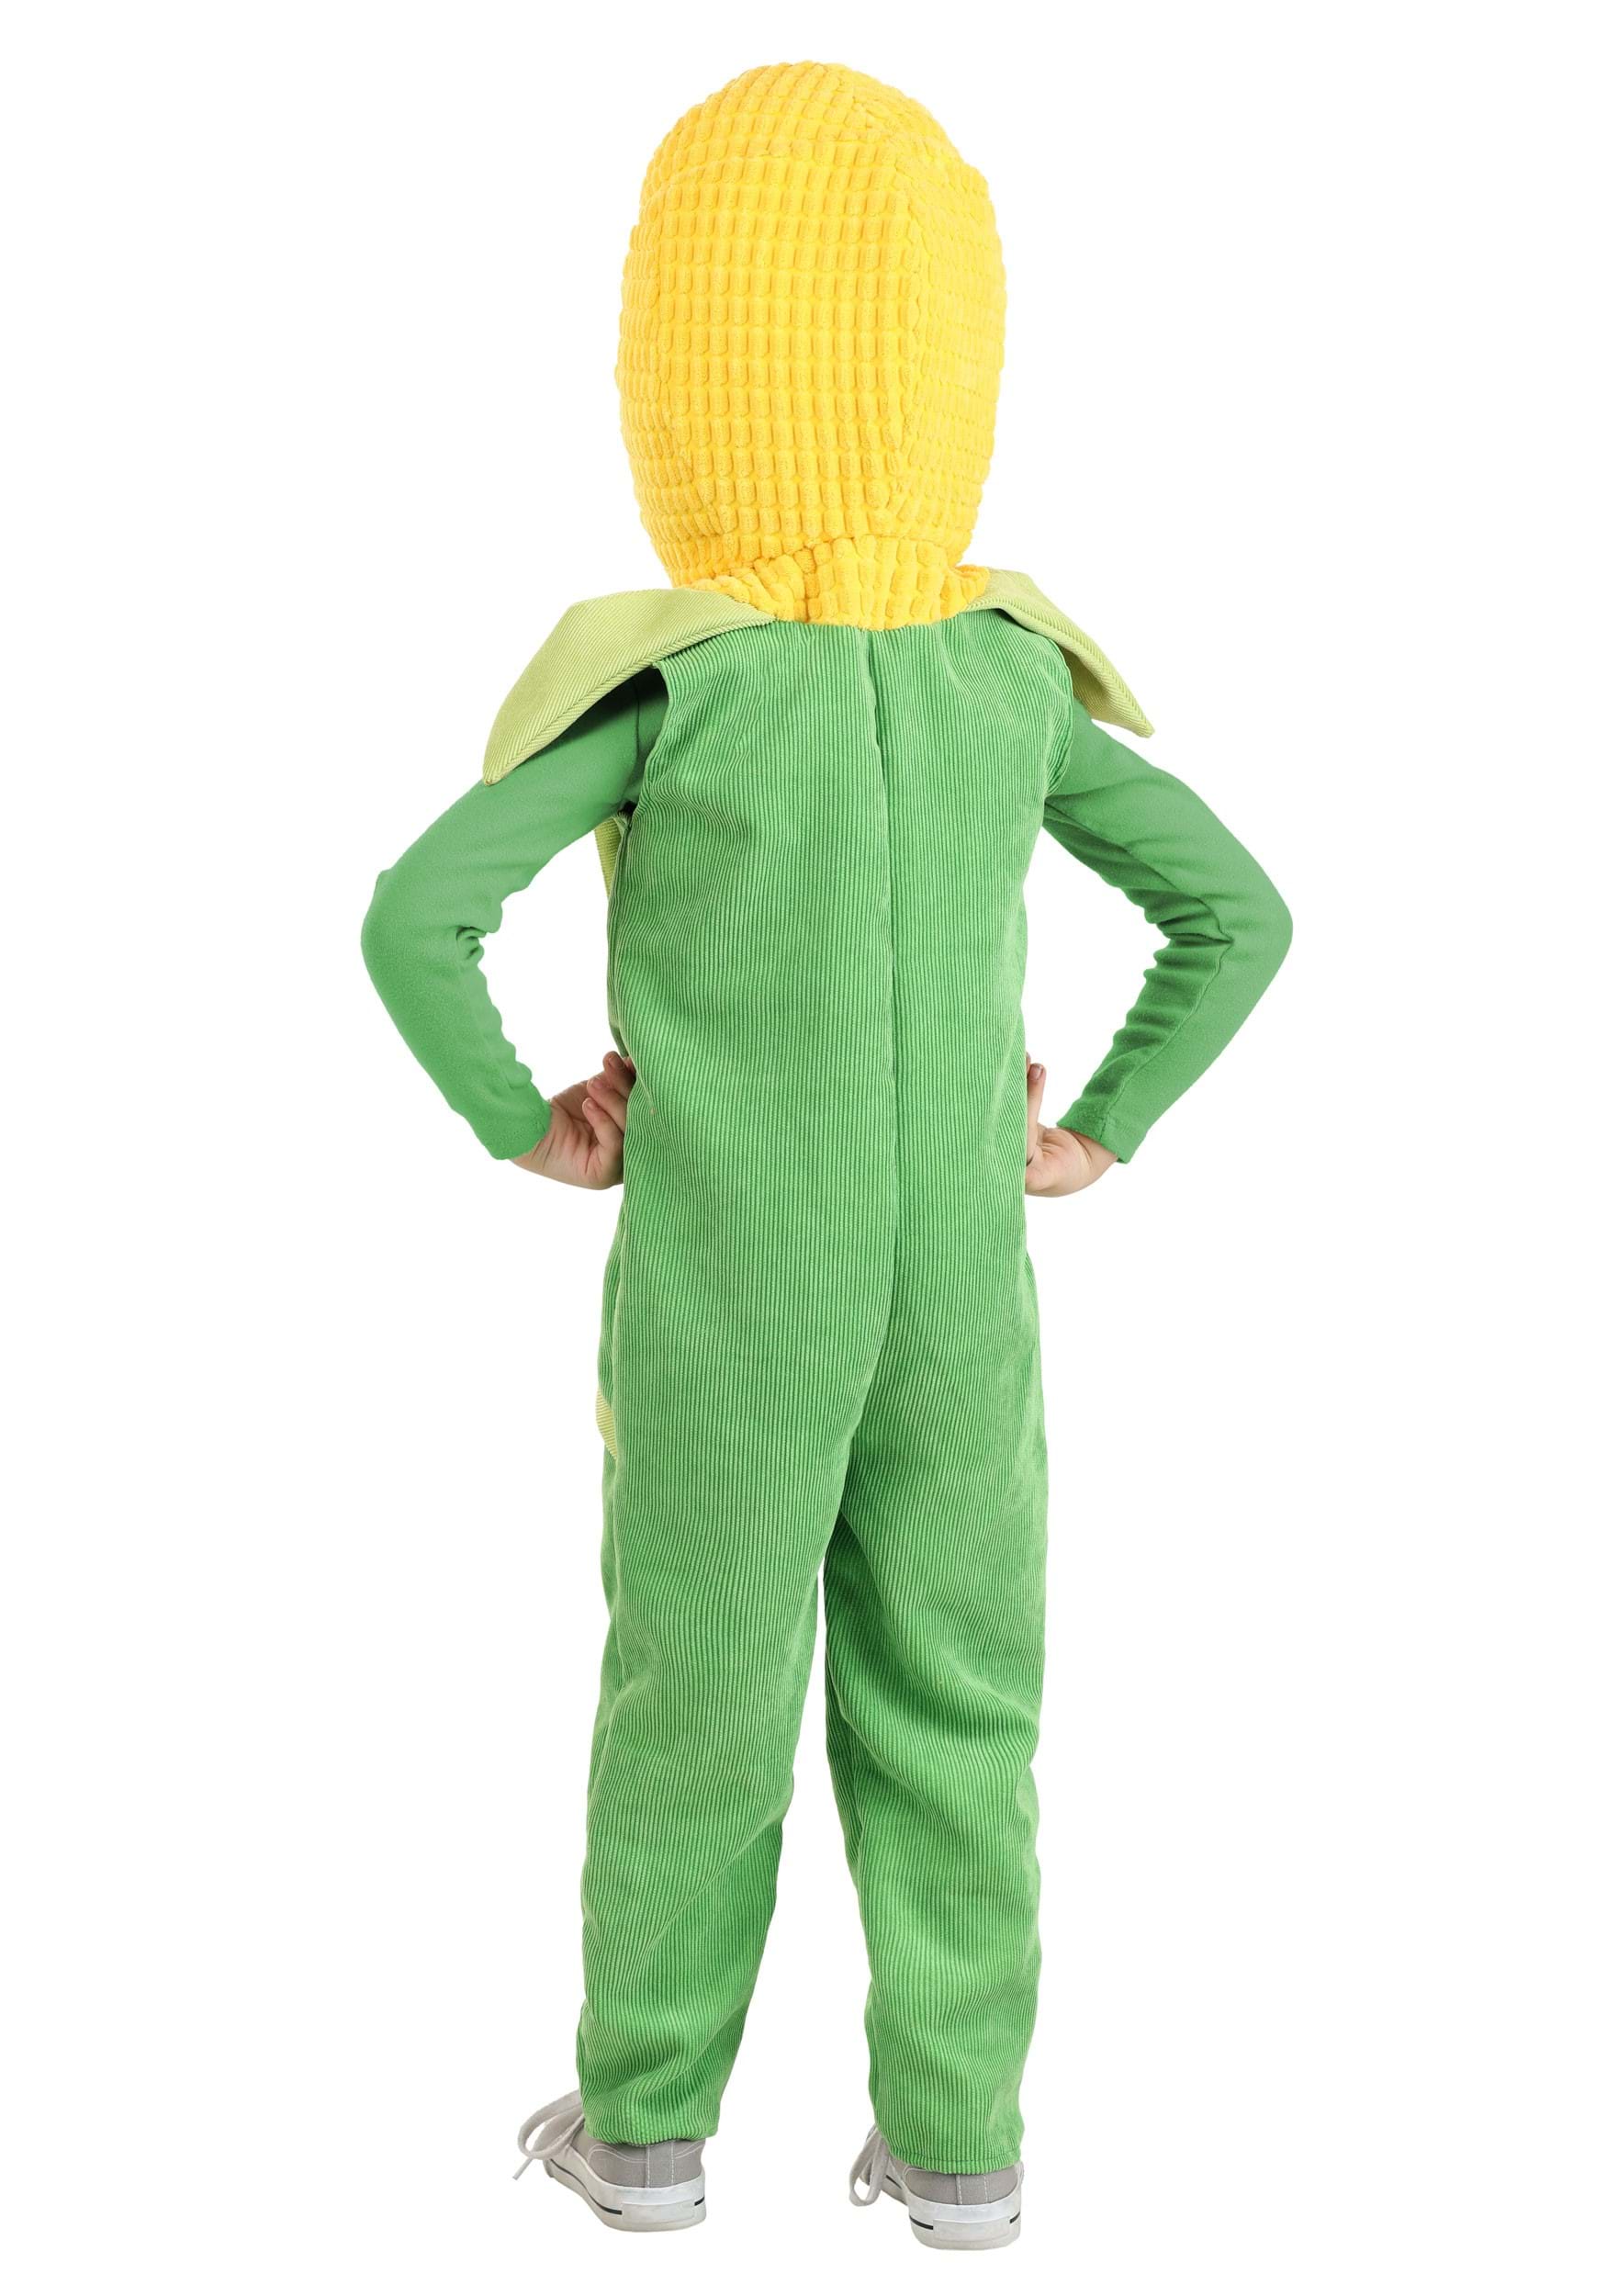 Corn Cob Jumper Toddler Costume